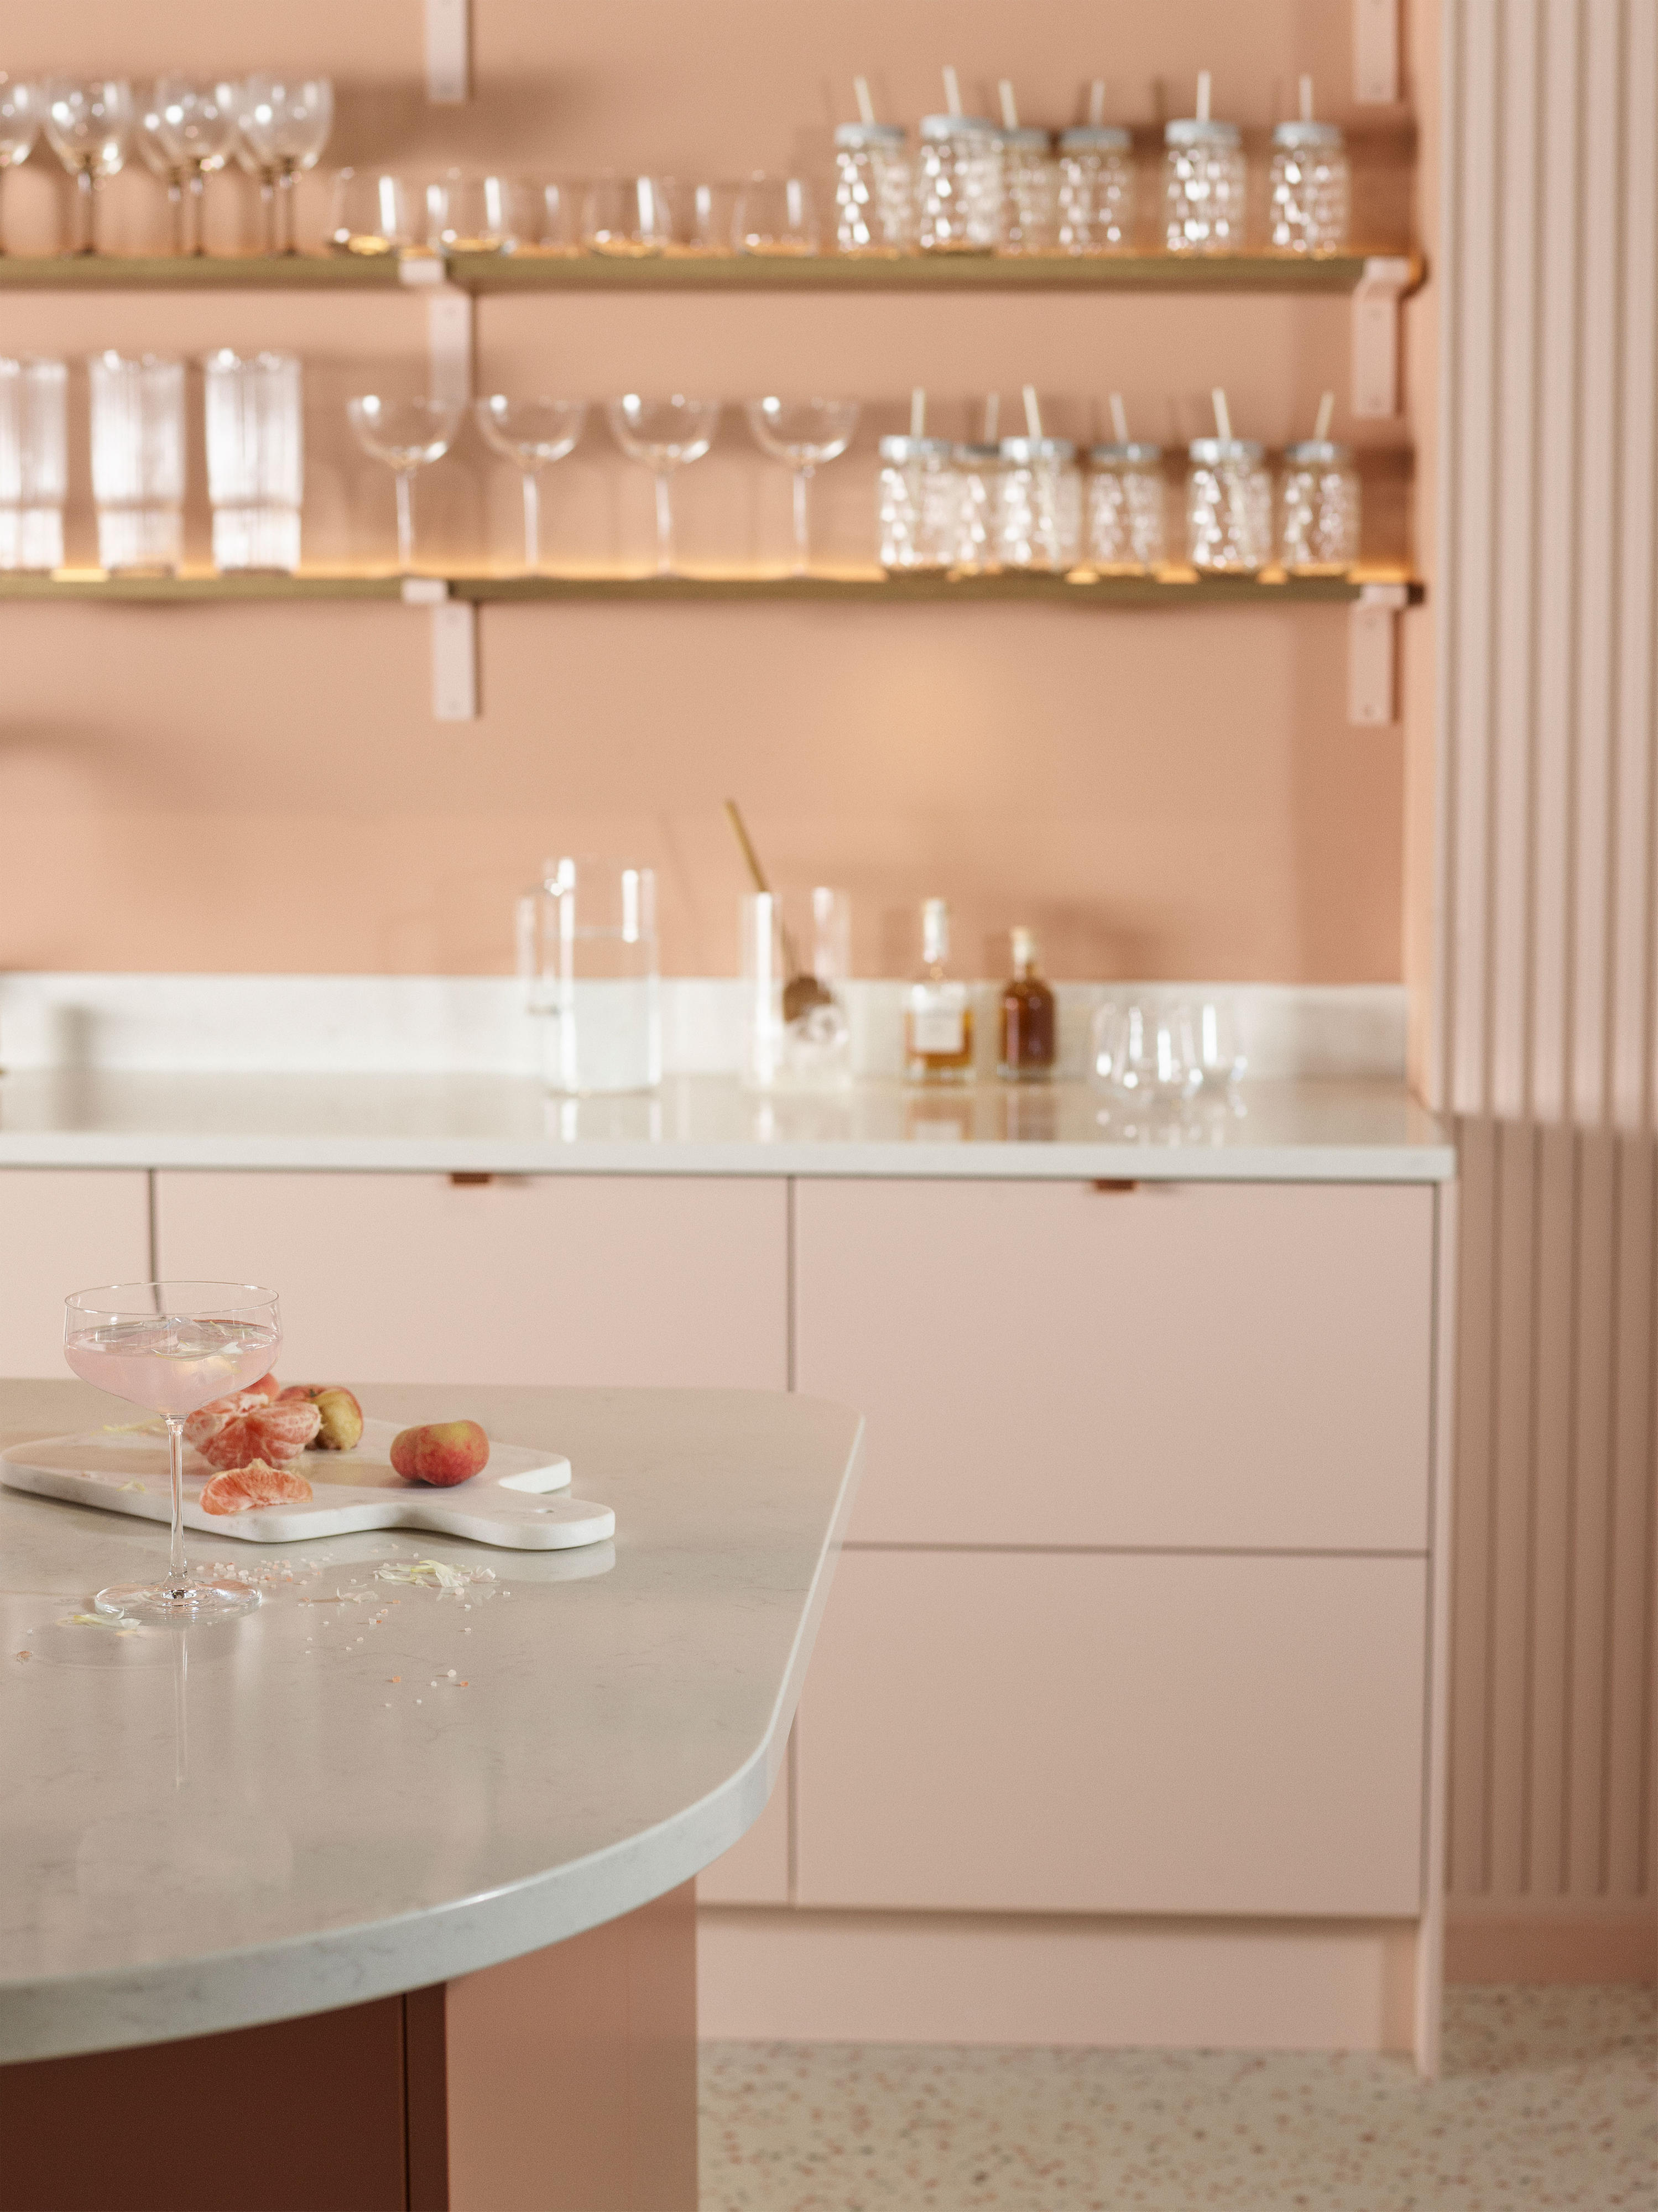 Epoq Trend Blush og Trend Sienna køkken med hylder fyldt med glas